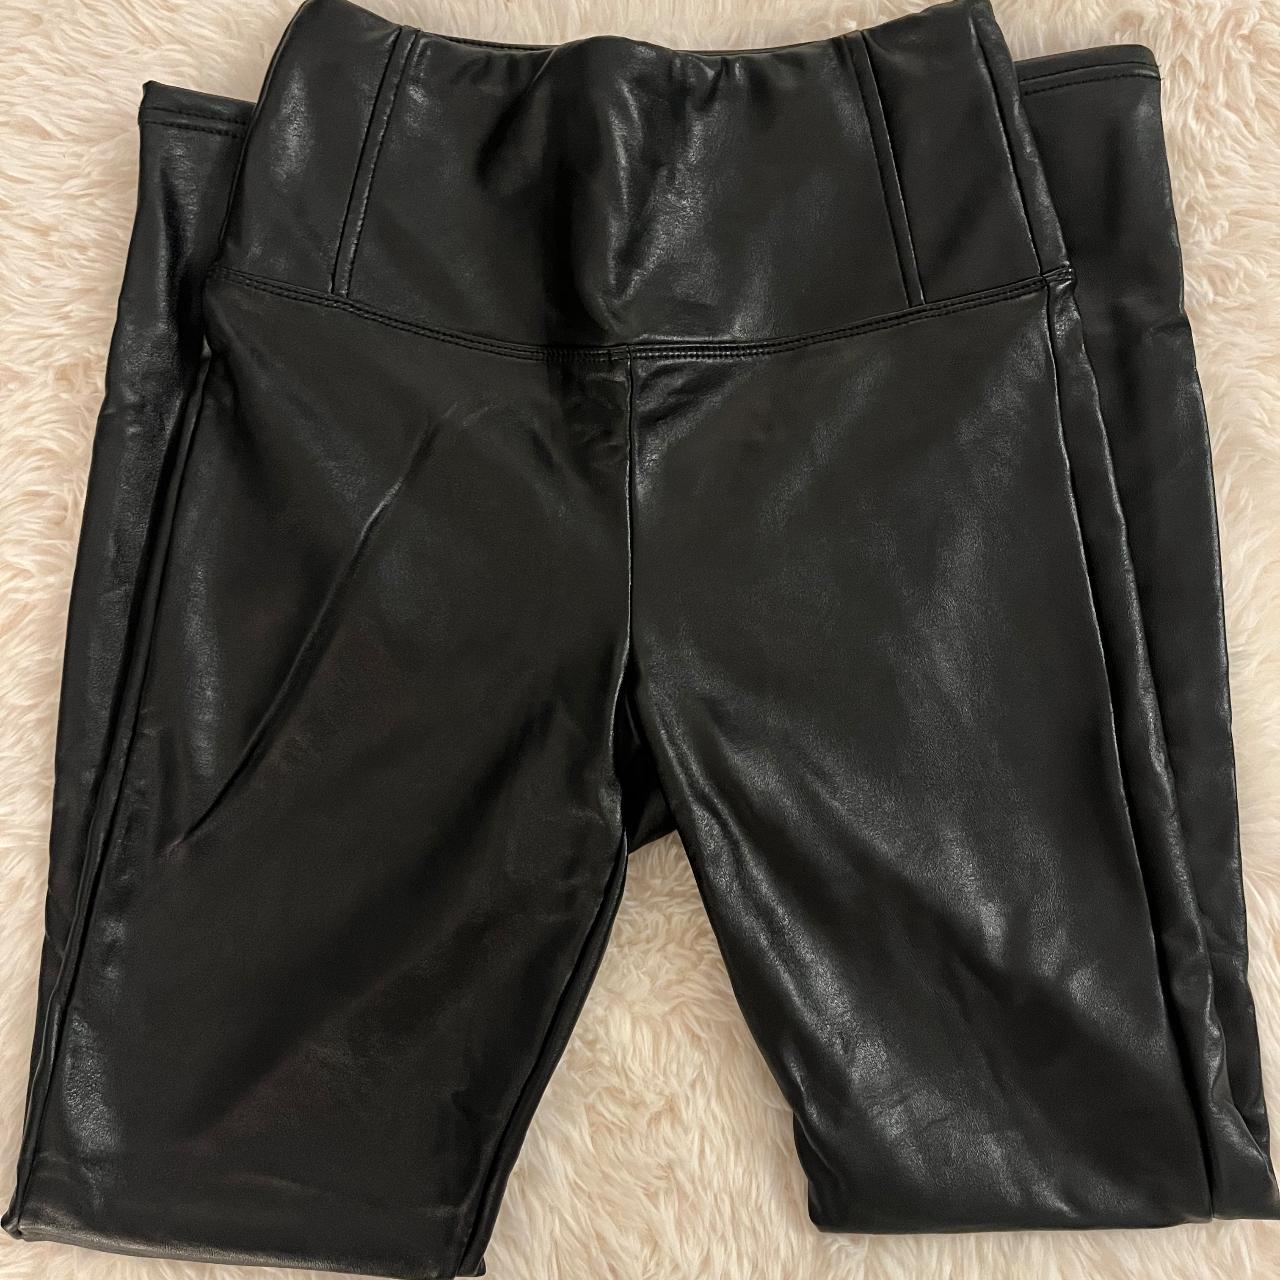 Black HUE leggings! Originally bought on  - Depop